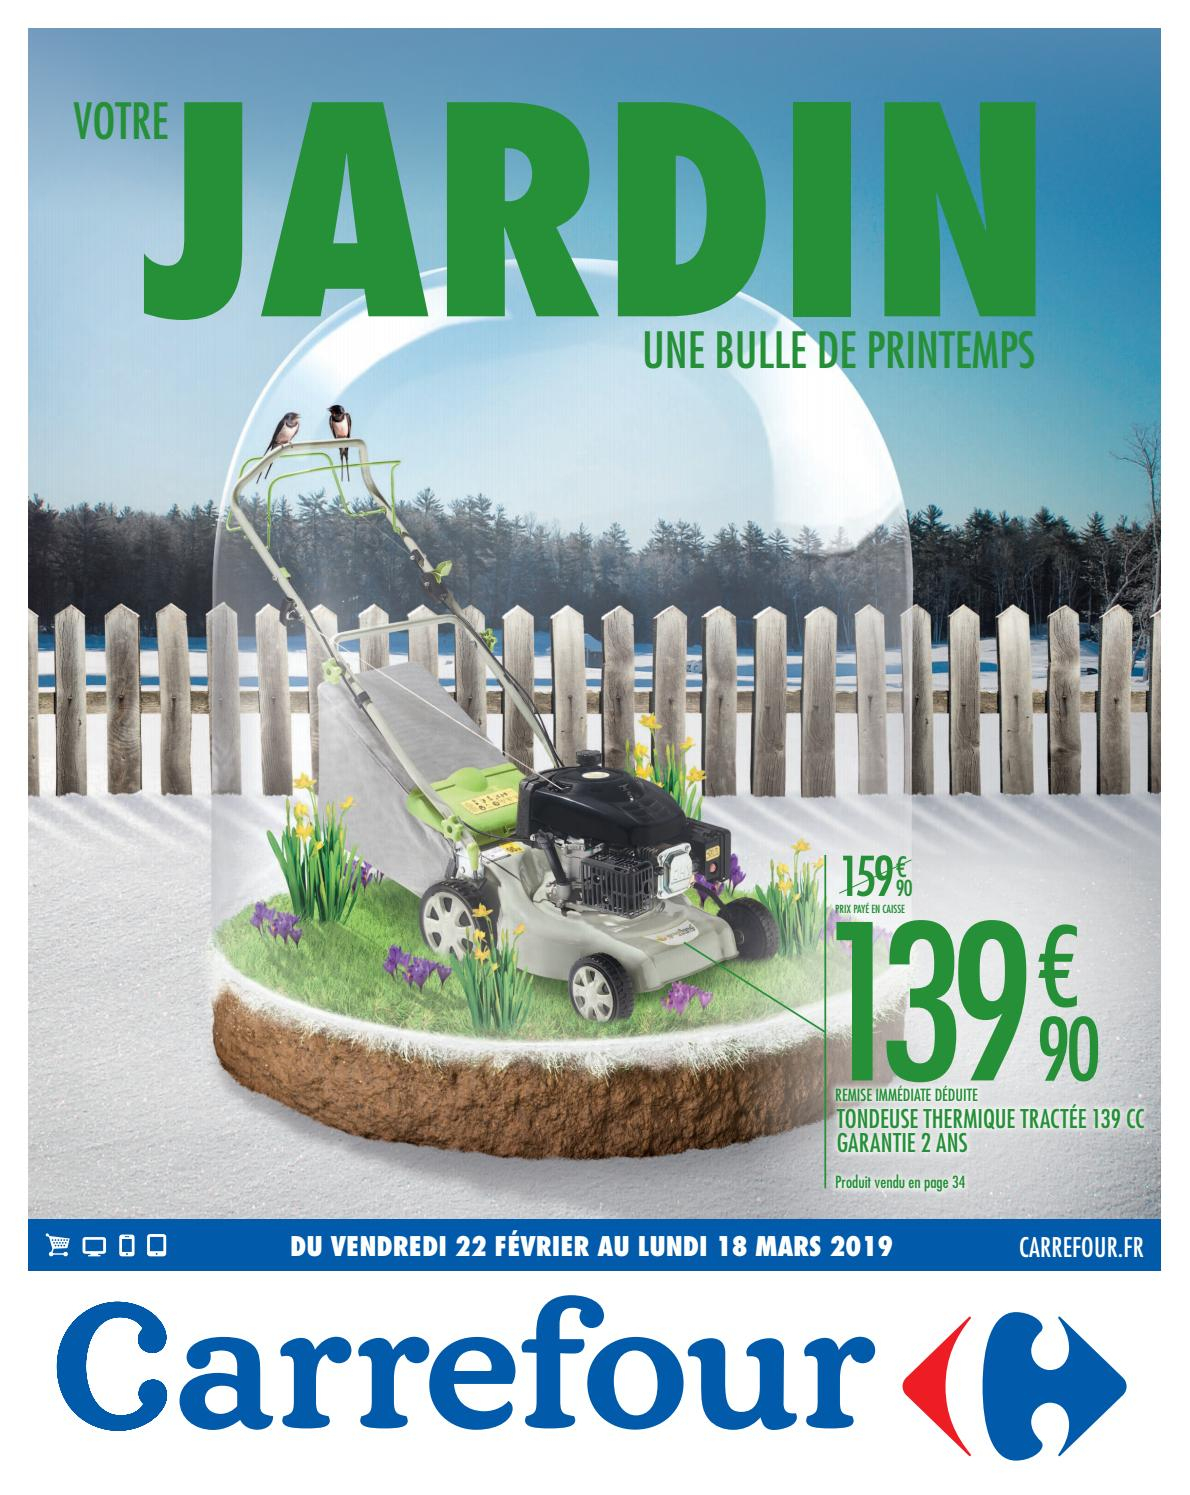 Jardin Carrefour By Ofertas Supermercados - Issuu concernant Abris De Jardin Carrefour